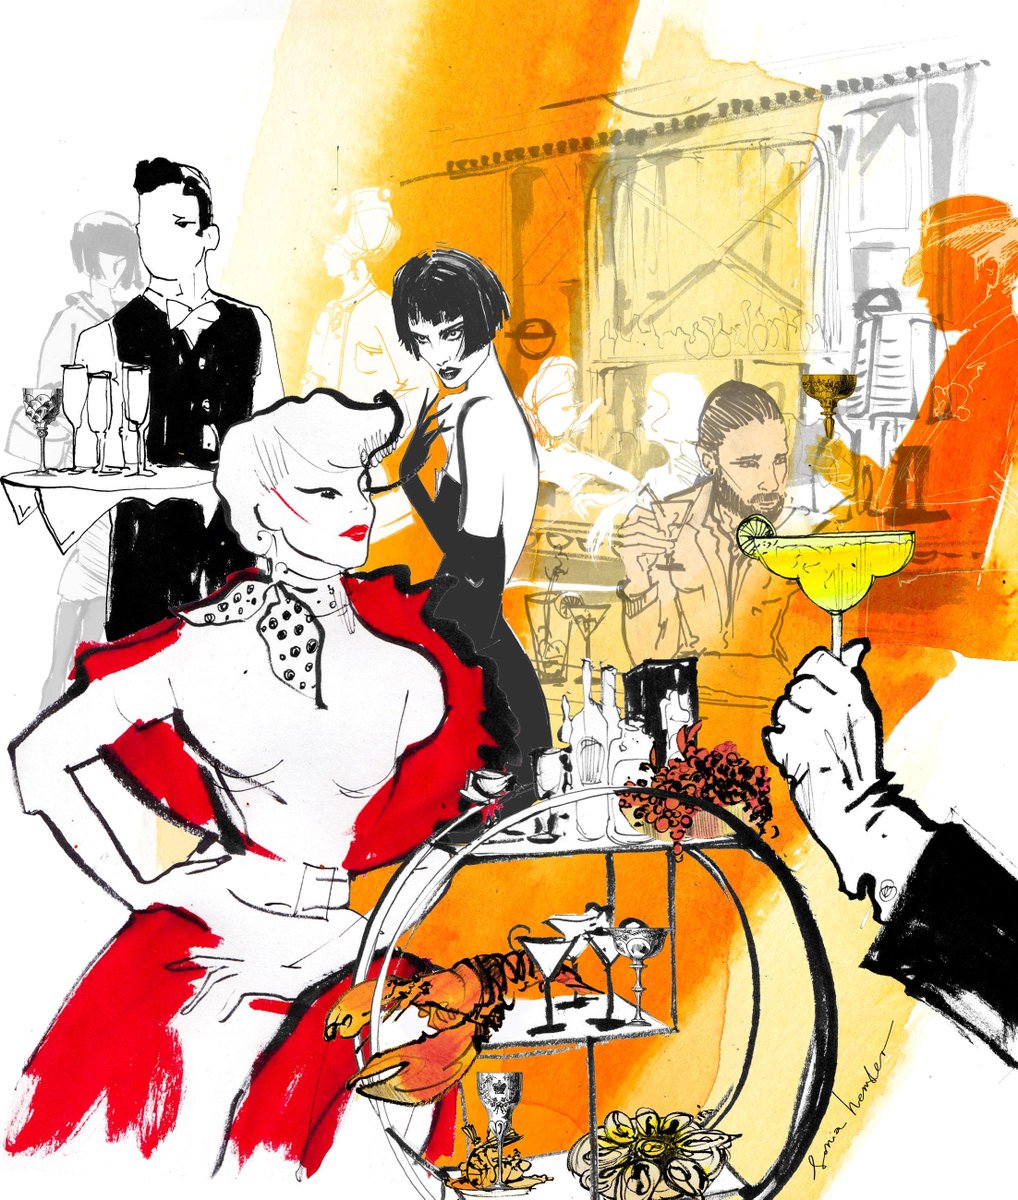 'Living the high life' by Sonia Hensler 

buff.ly/3JLrbek 

#ink #mayfair #london #bar #cocktails #lobster #barlife #restaurant #sociallife #socialising #foodanddrink #foodeditorial #drinkeditorial #editorialillustration #editorialillustrator #magazineillustration